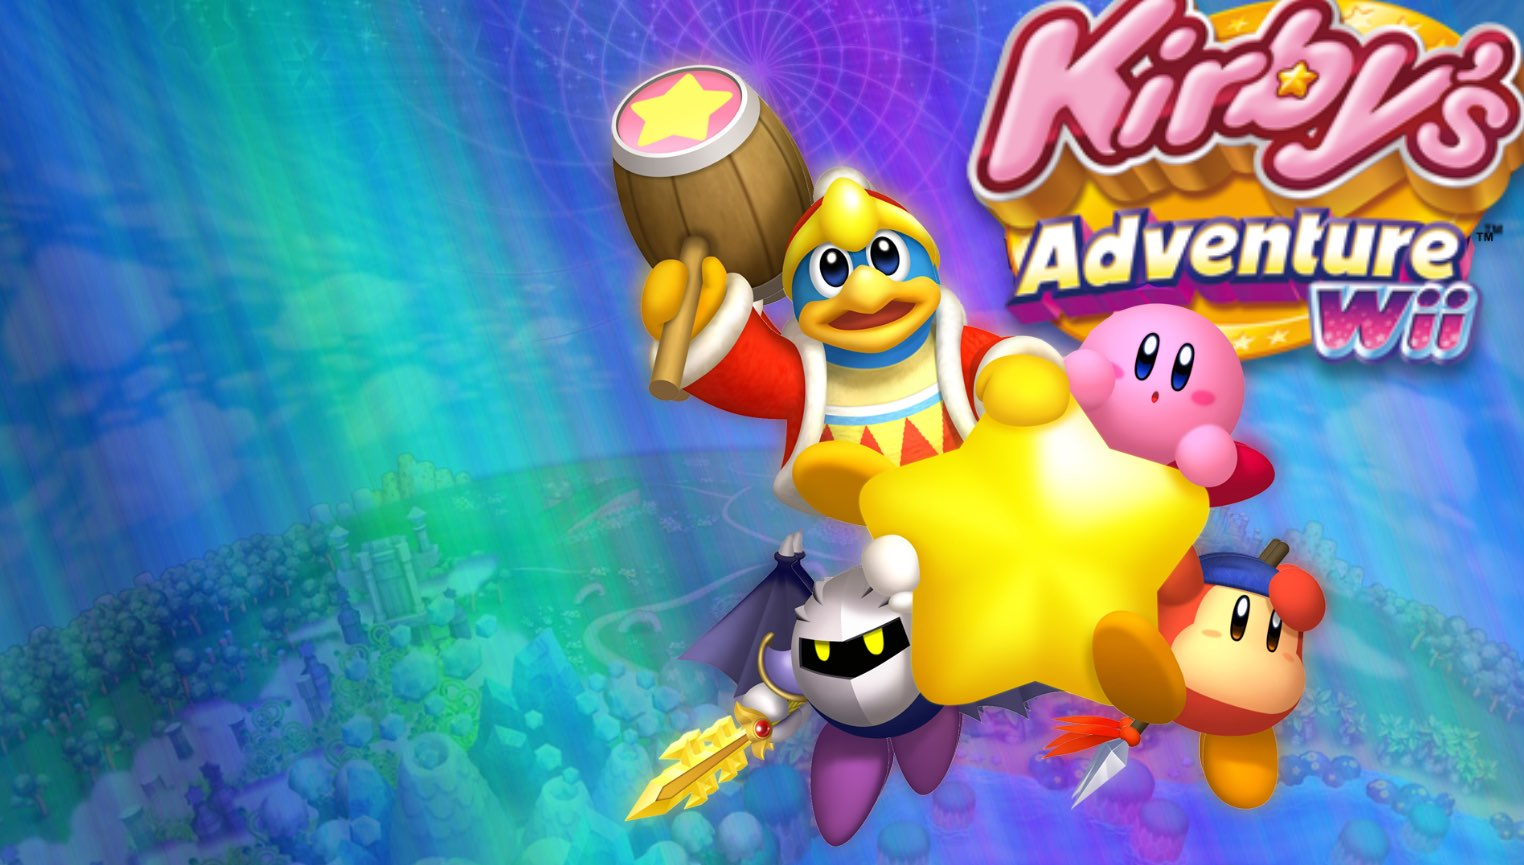 Kirby’s Adventure Wii (Wii, 2011)